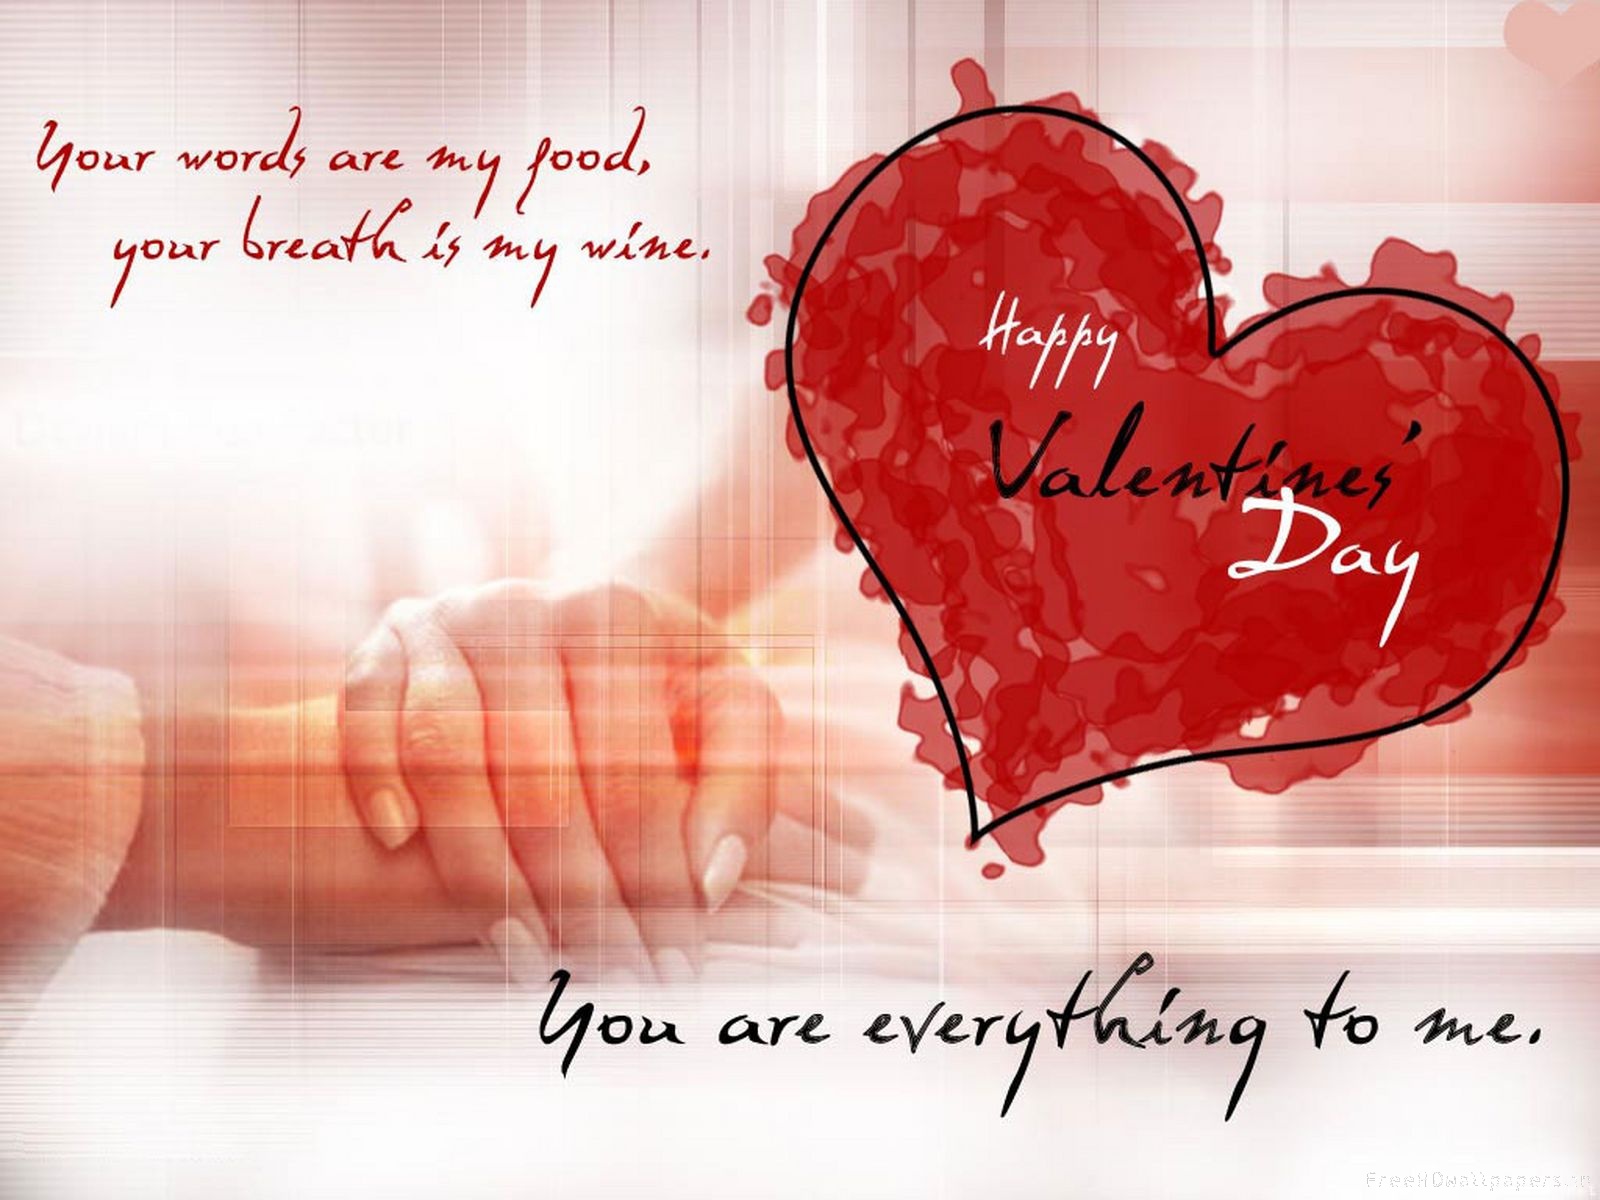 http://1.bp.blogspot.com/-_GZwyy21mmI/UOk4G8PlrzI/AAAAAAAAA0w/ryIP_AuslzQ/s1600/Valentines+Day+love+cards+(1).jpg